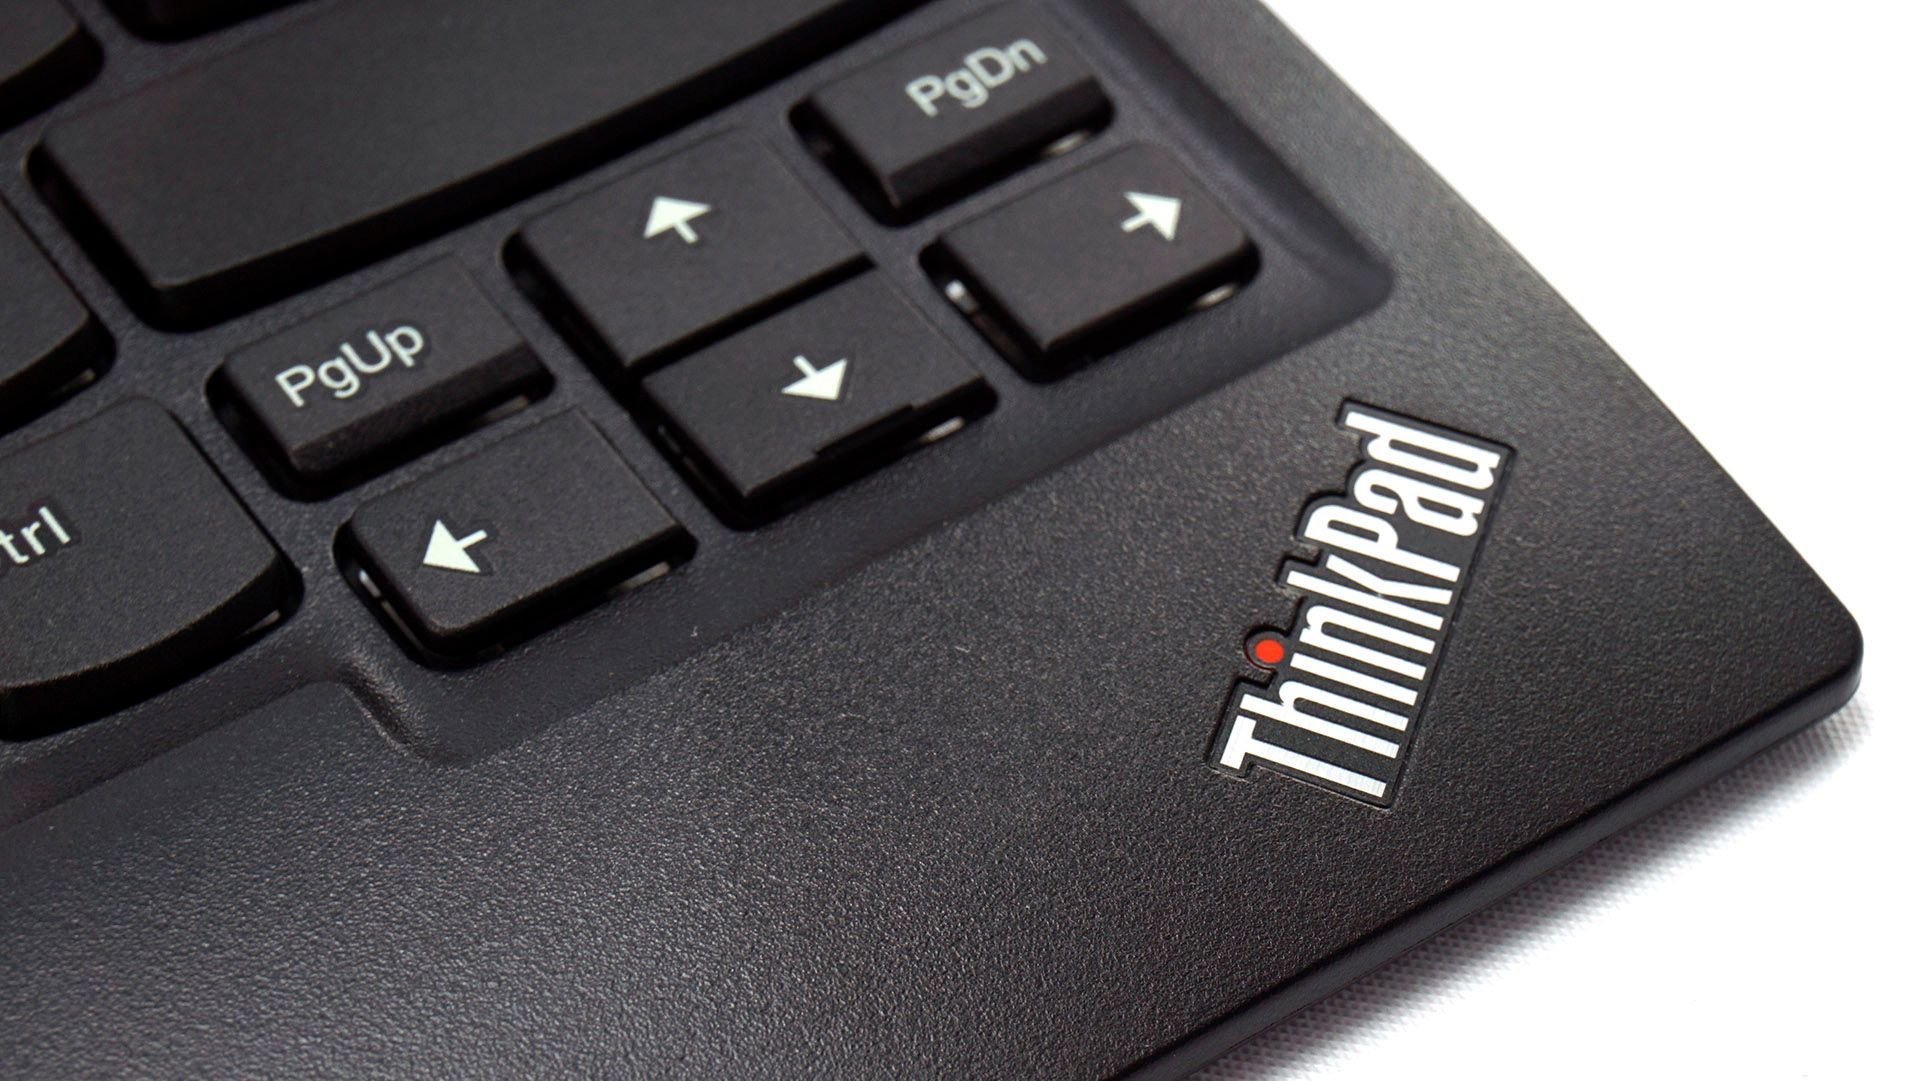 ThinkPad logo on keyboard